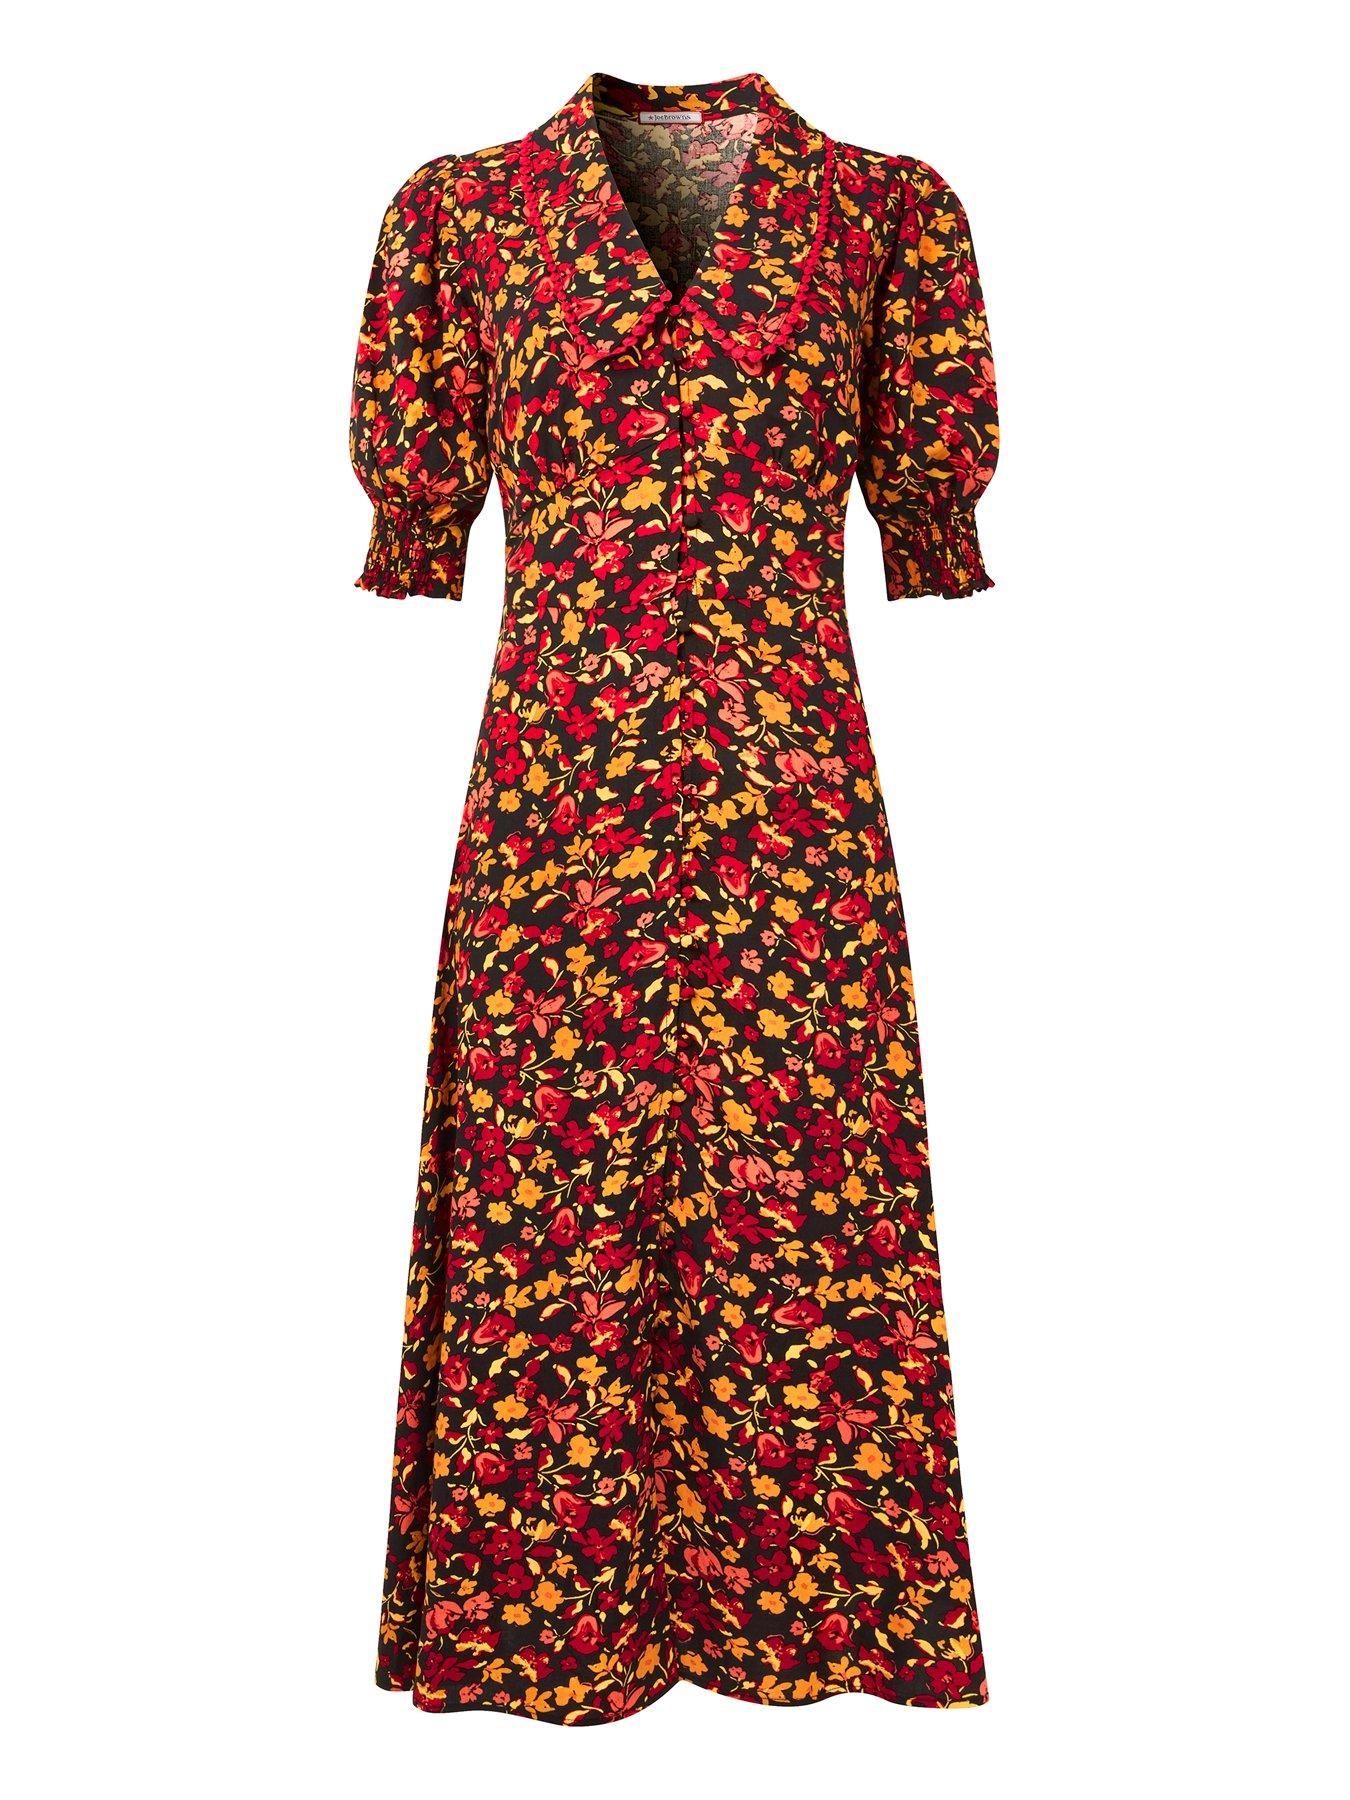 Joe Browns Petite Priya Printed Jersey Dress